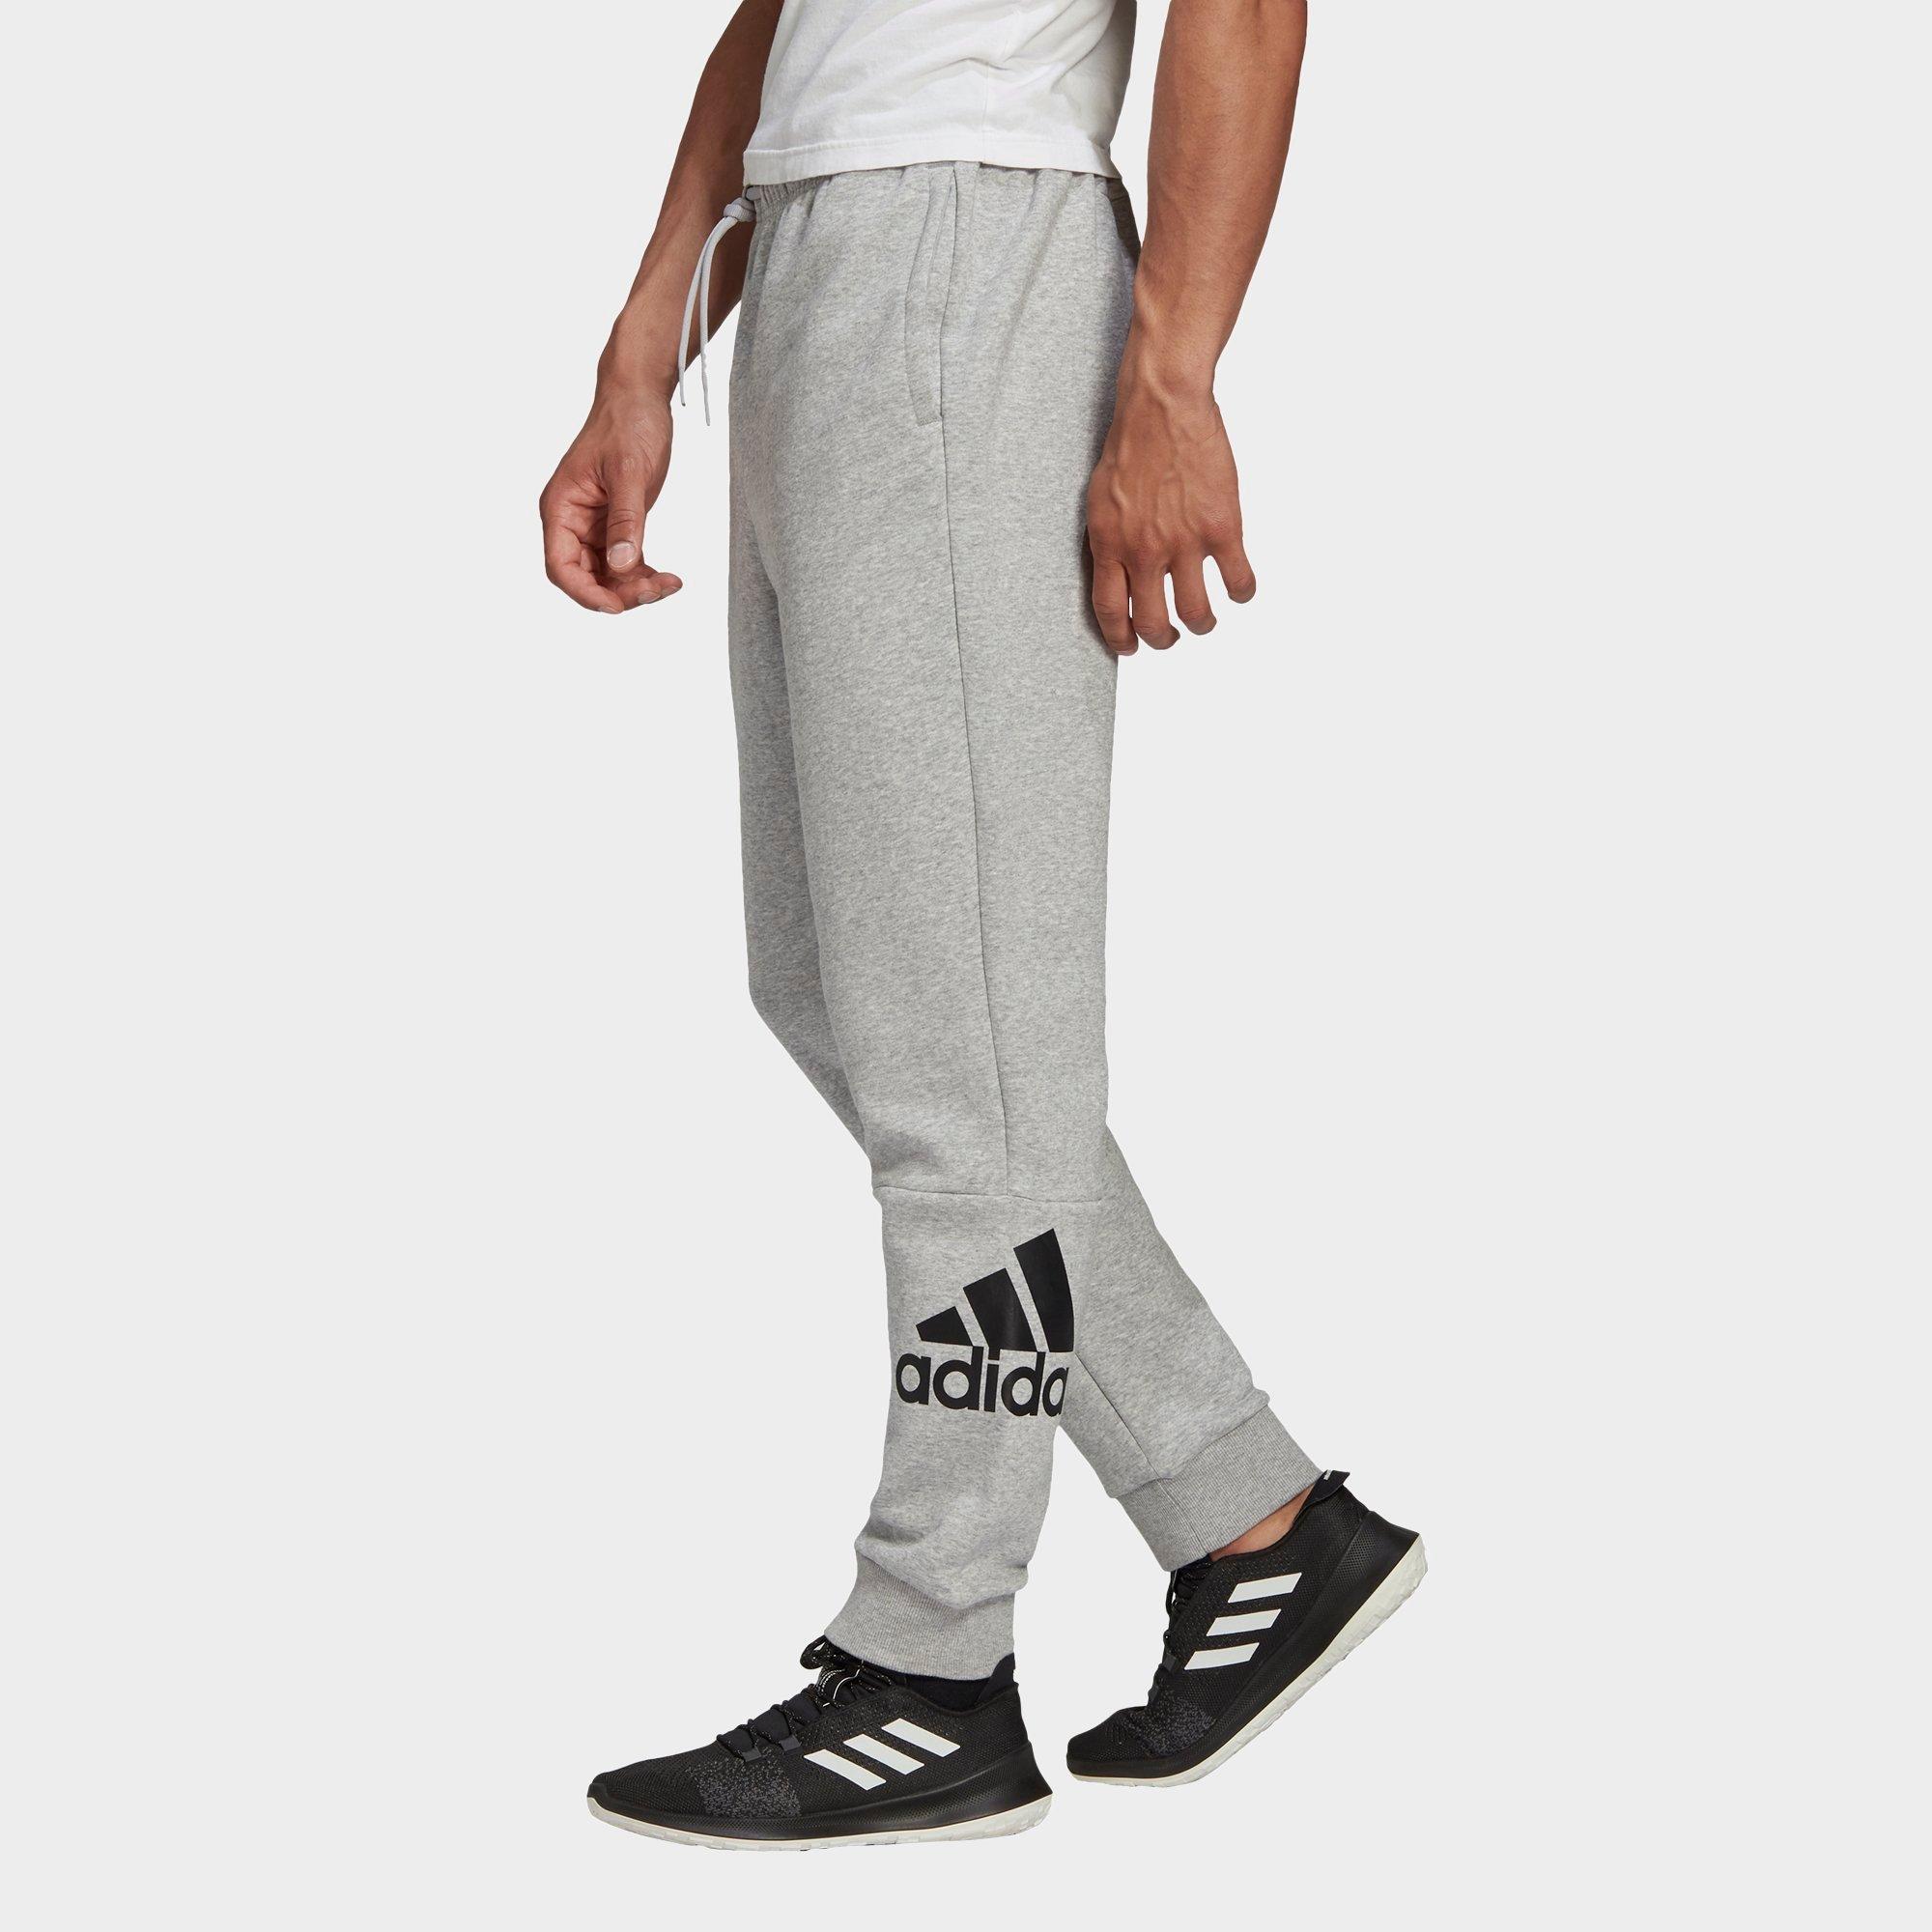 adidas heather grey joggers